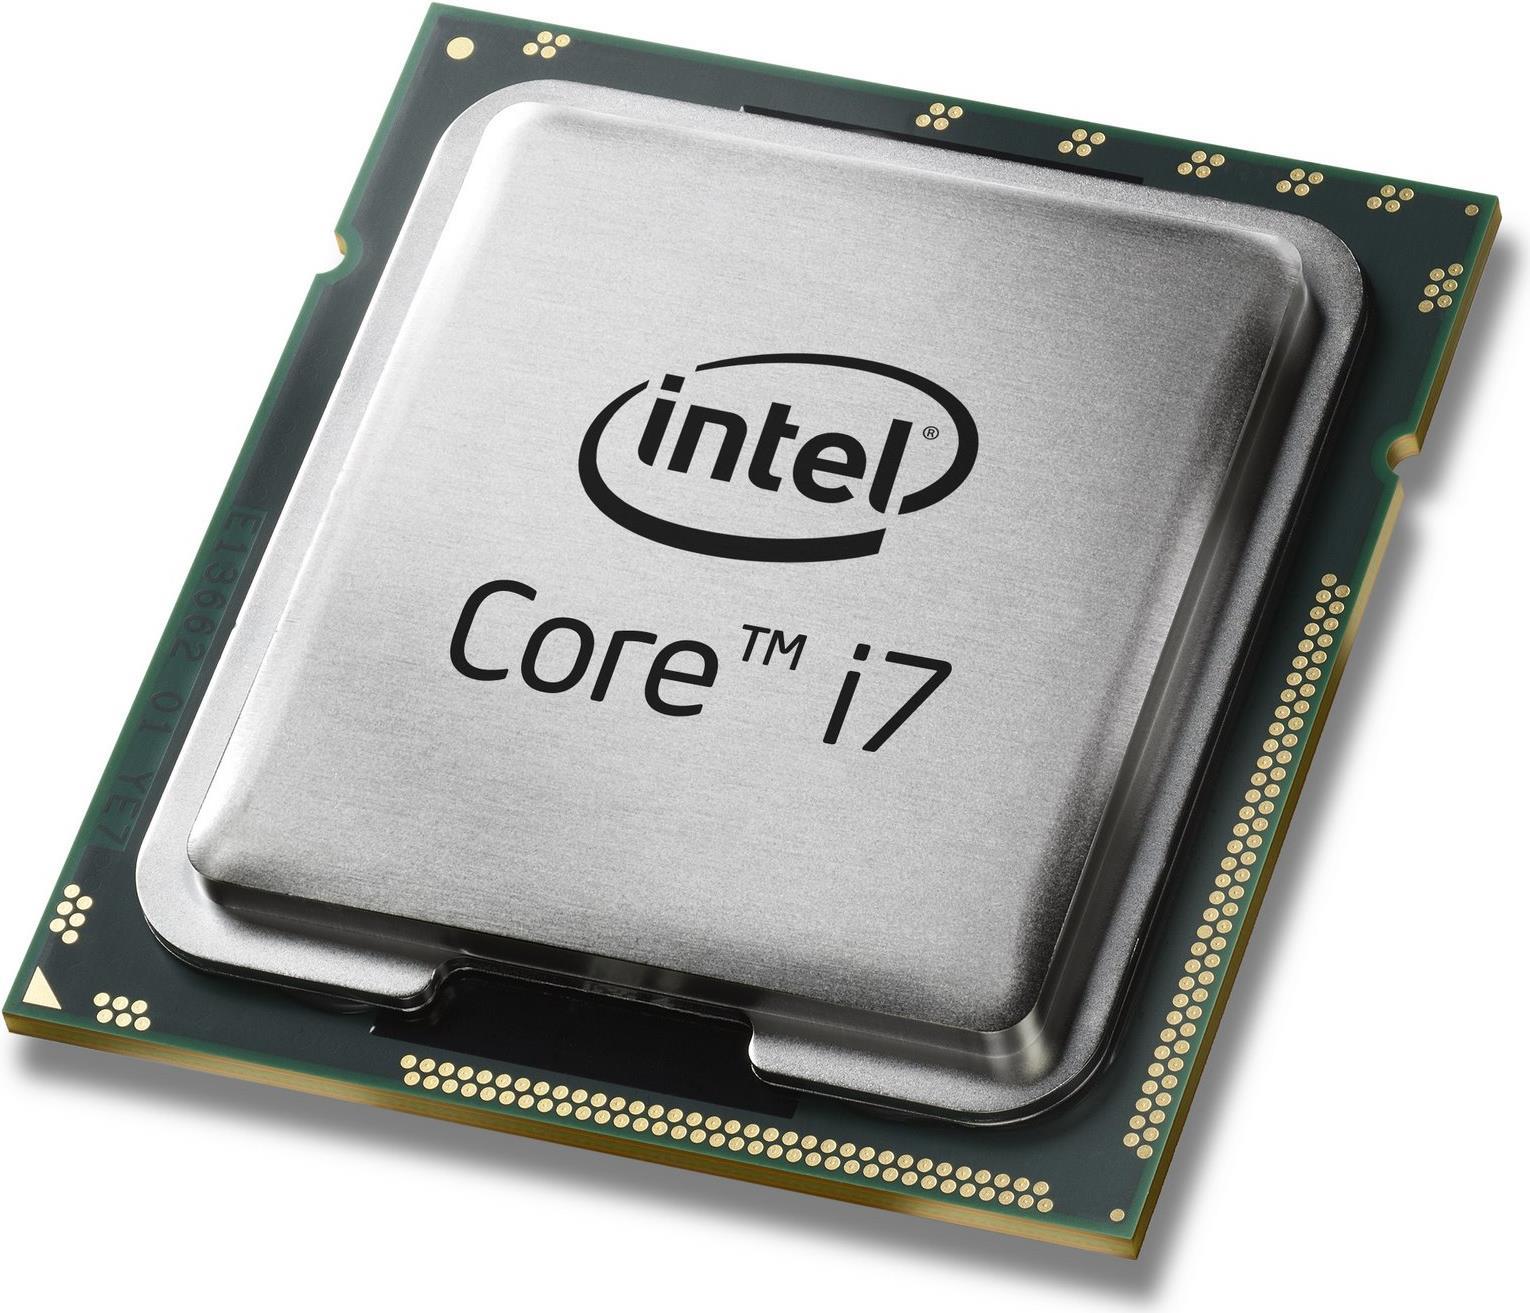 HP Intel Core i7-4600M (737330-001)